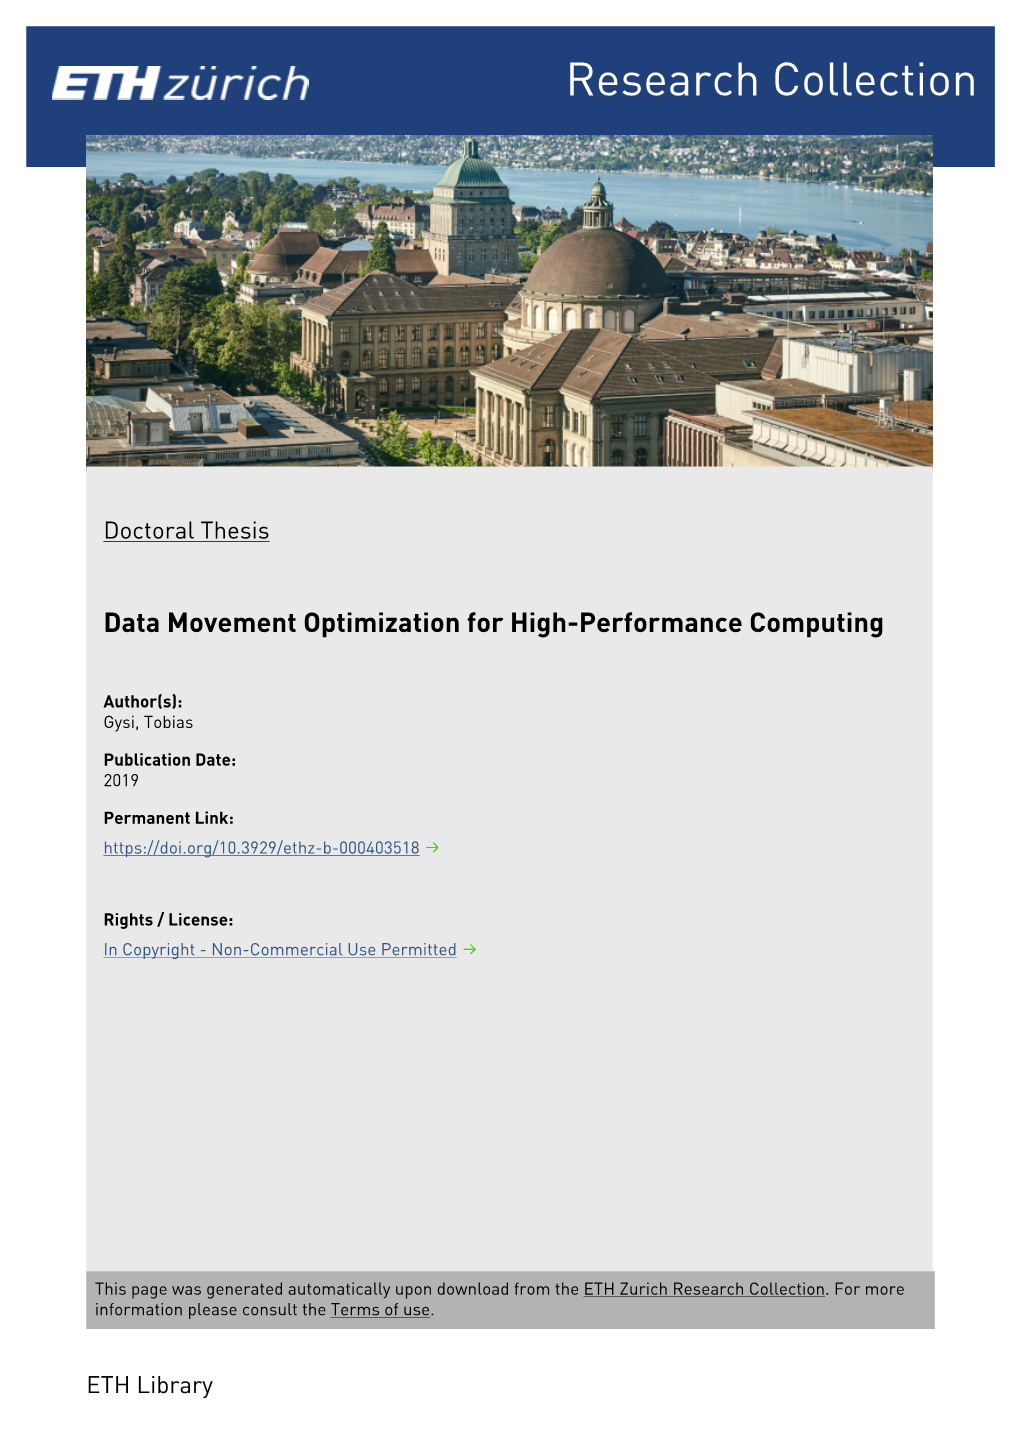 Data Movement Optimization for High-Performance Computing